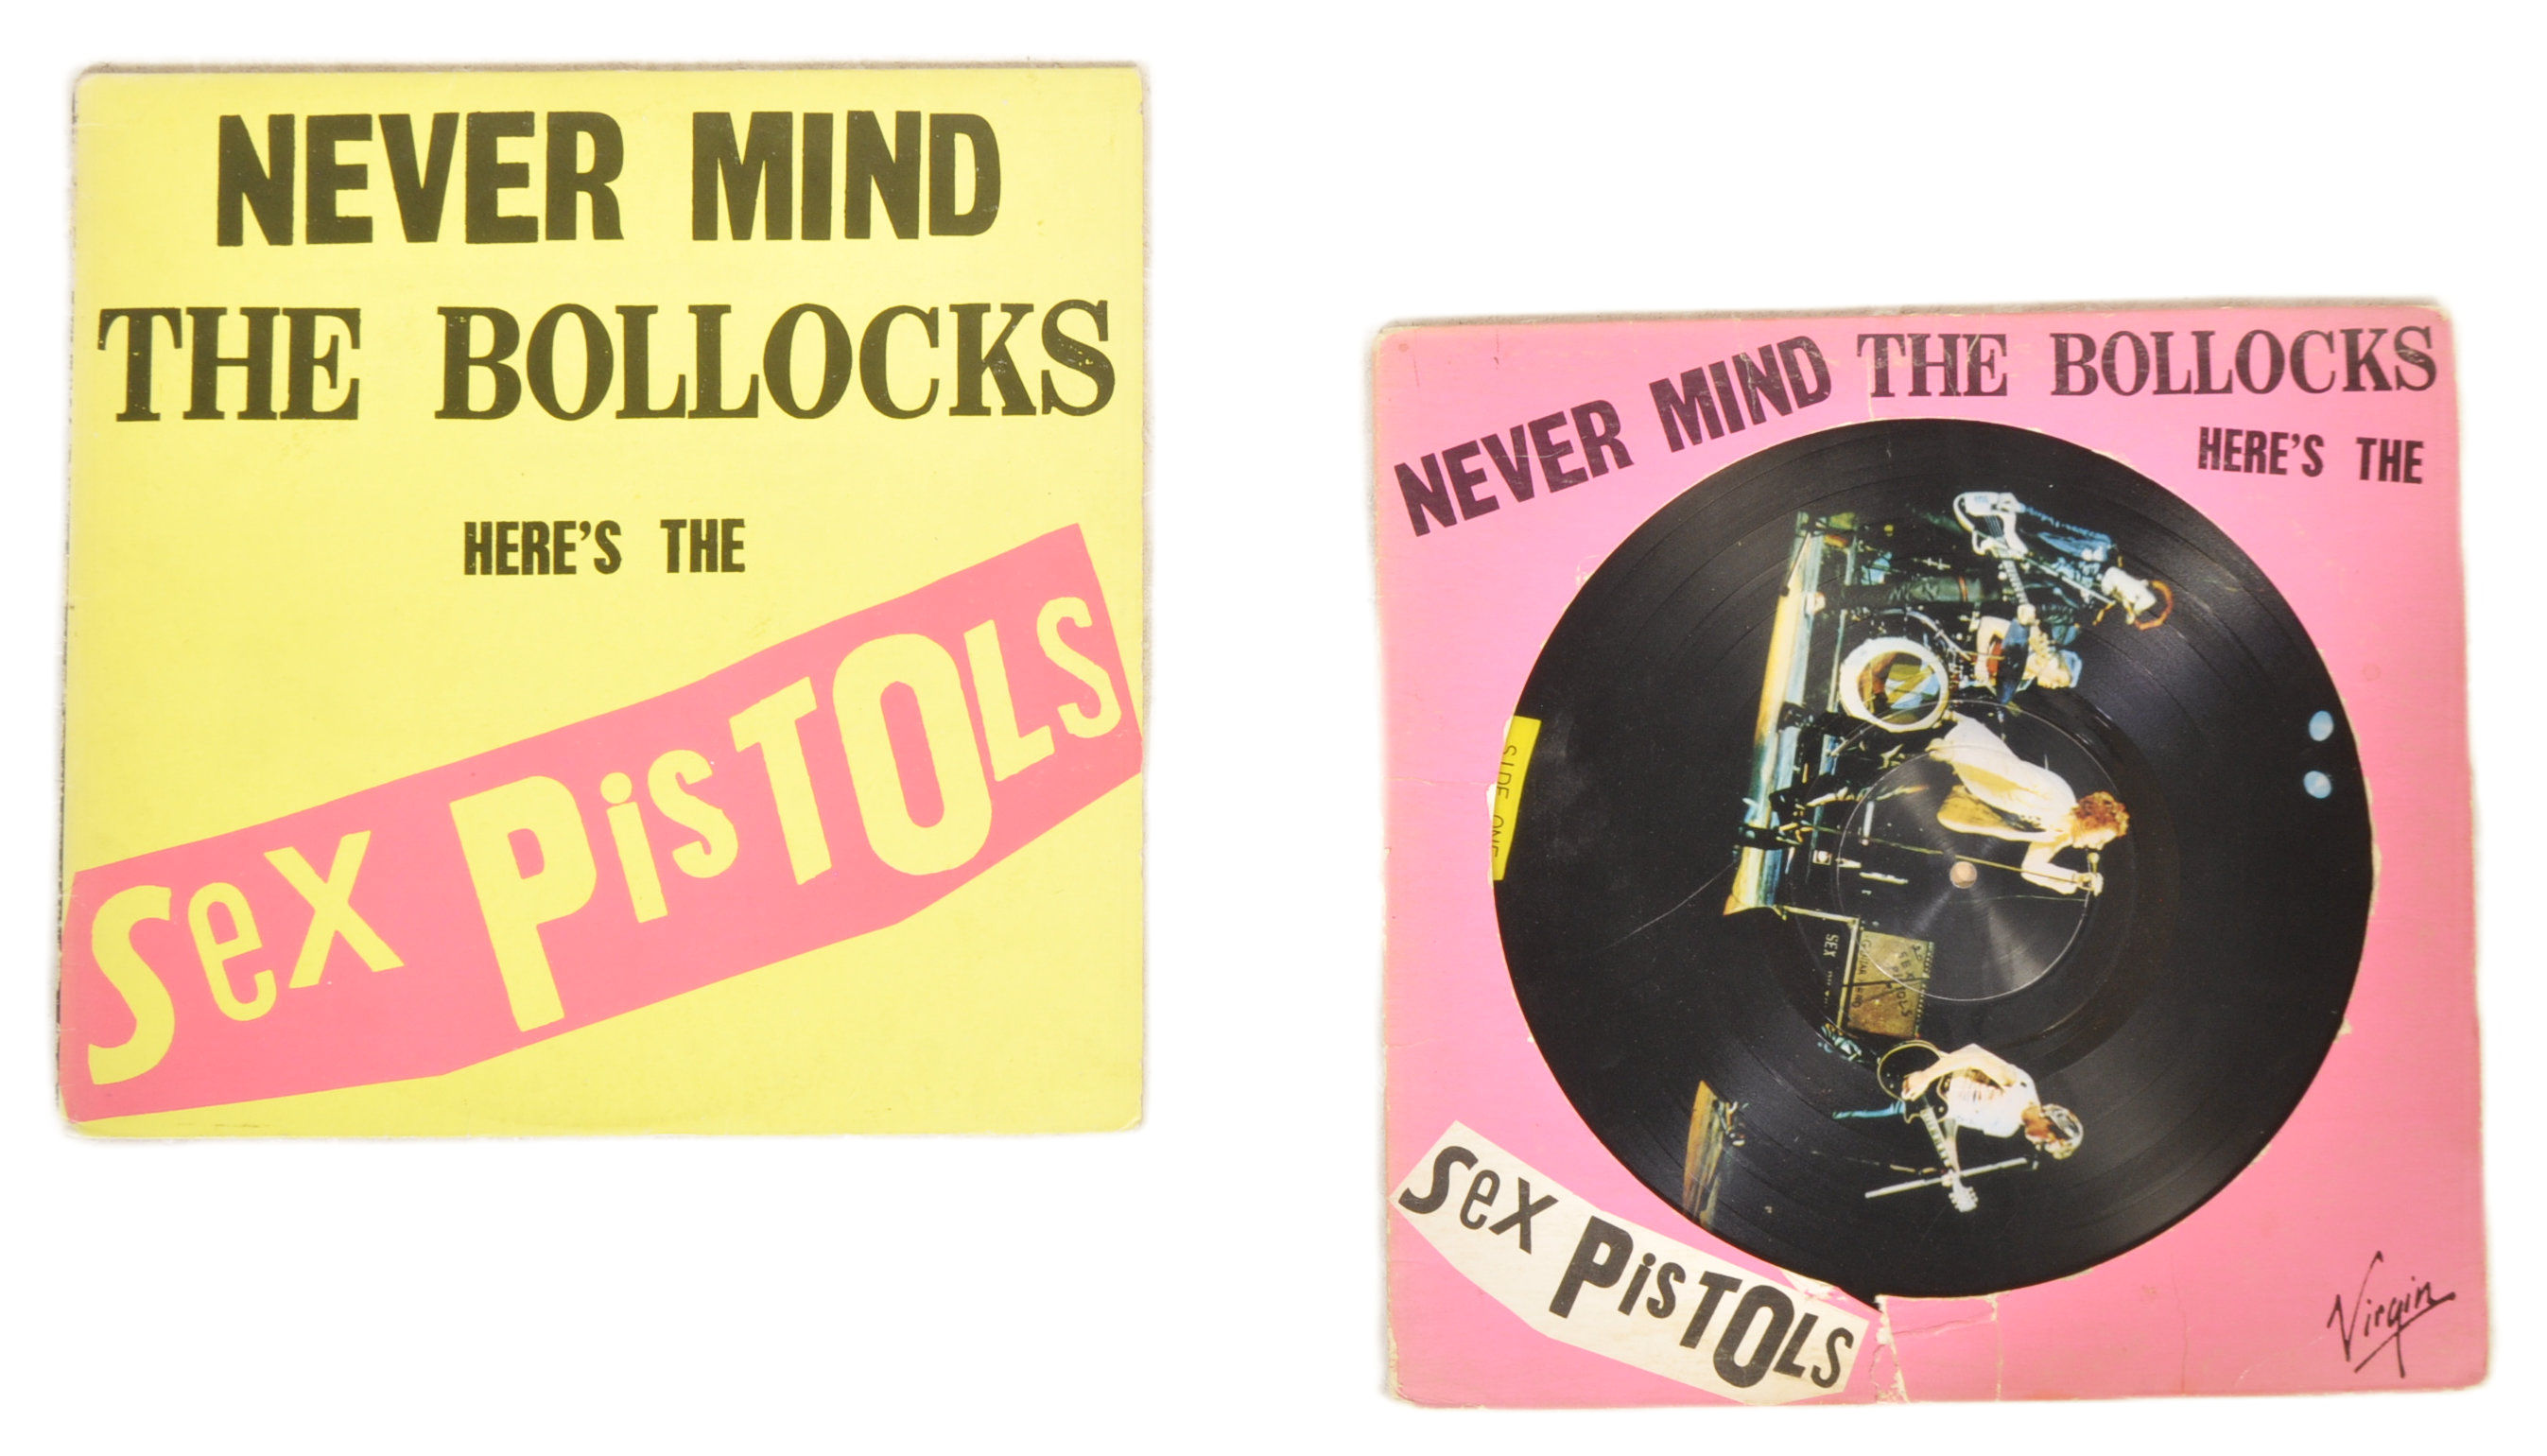 SEX PISTOLS - NEVER MIND THE BOLLOCKS - LP & PICTURE DISC